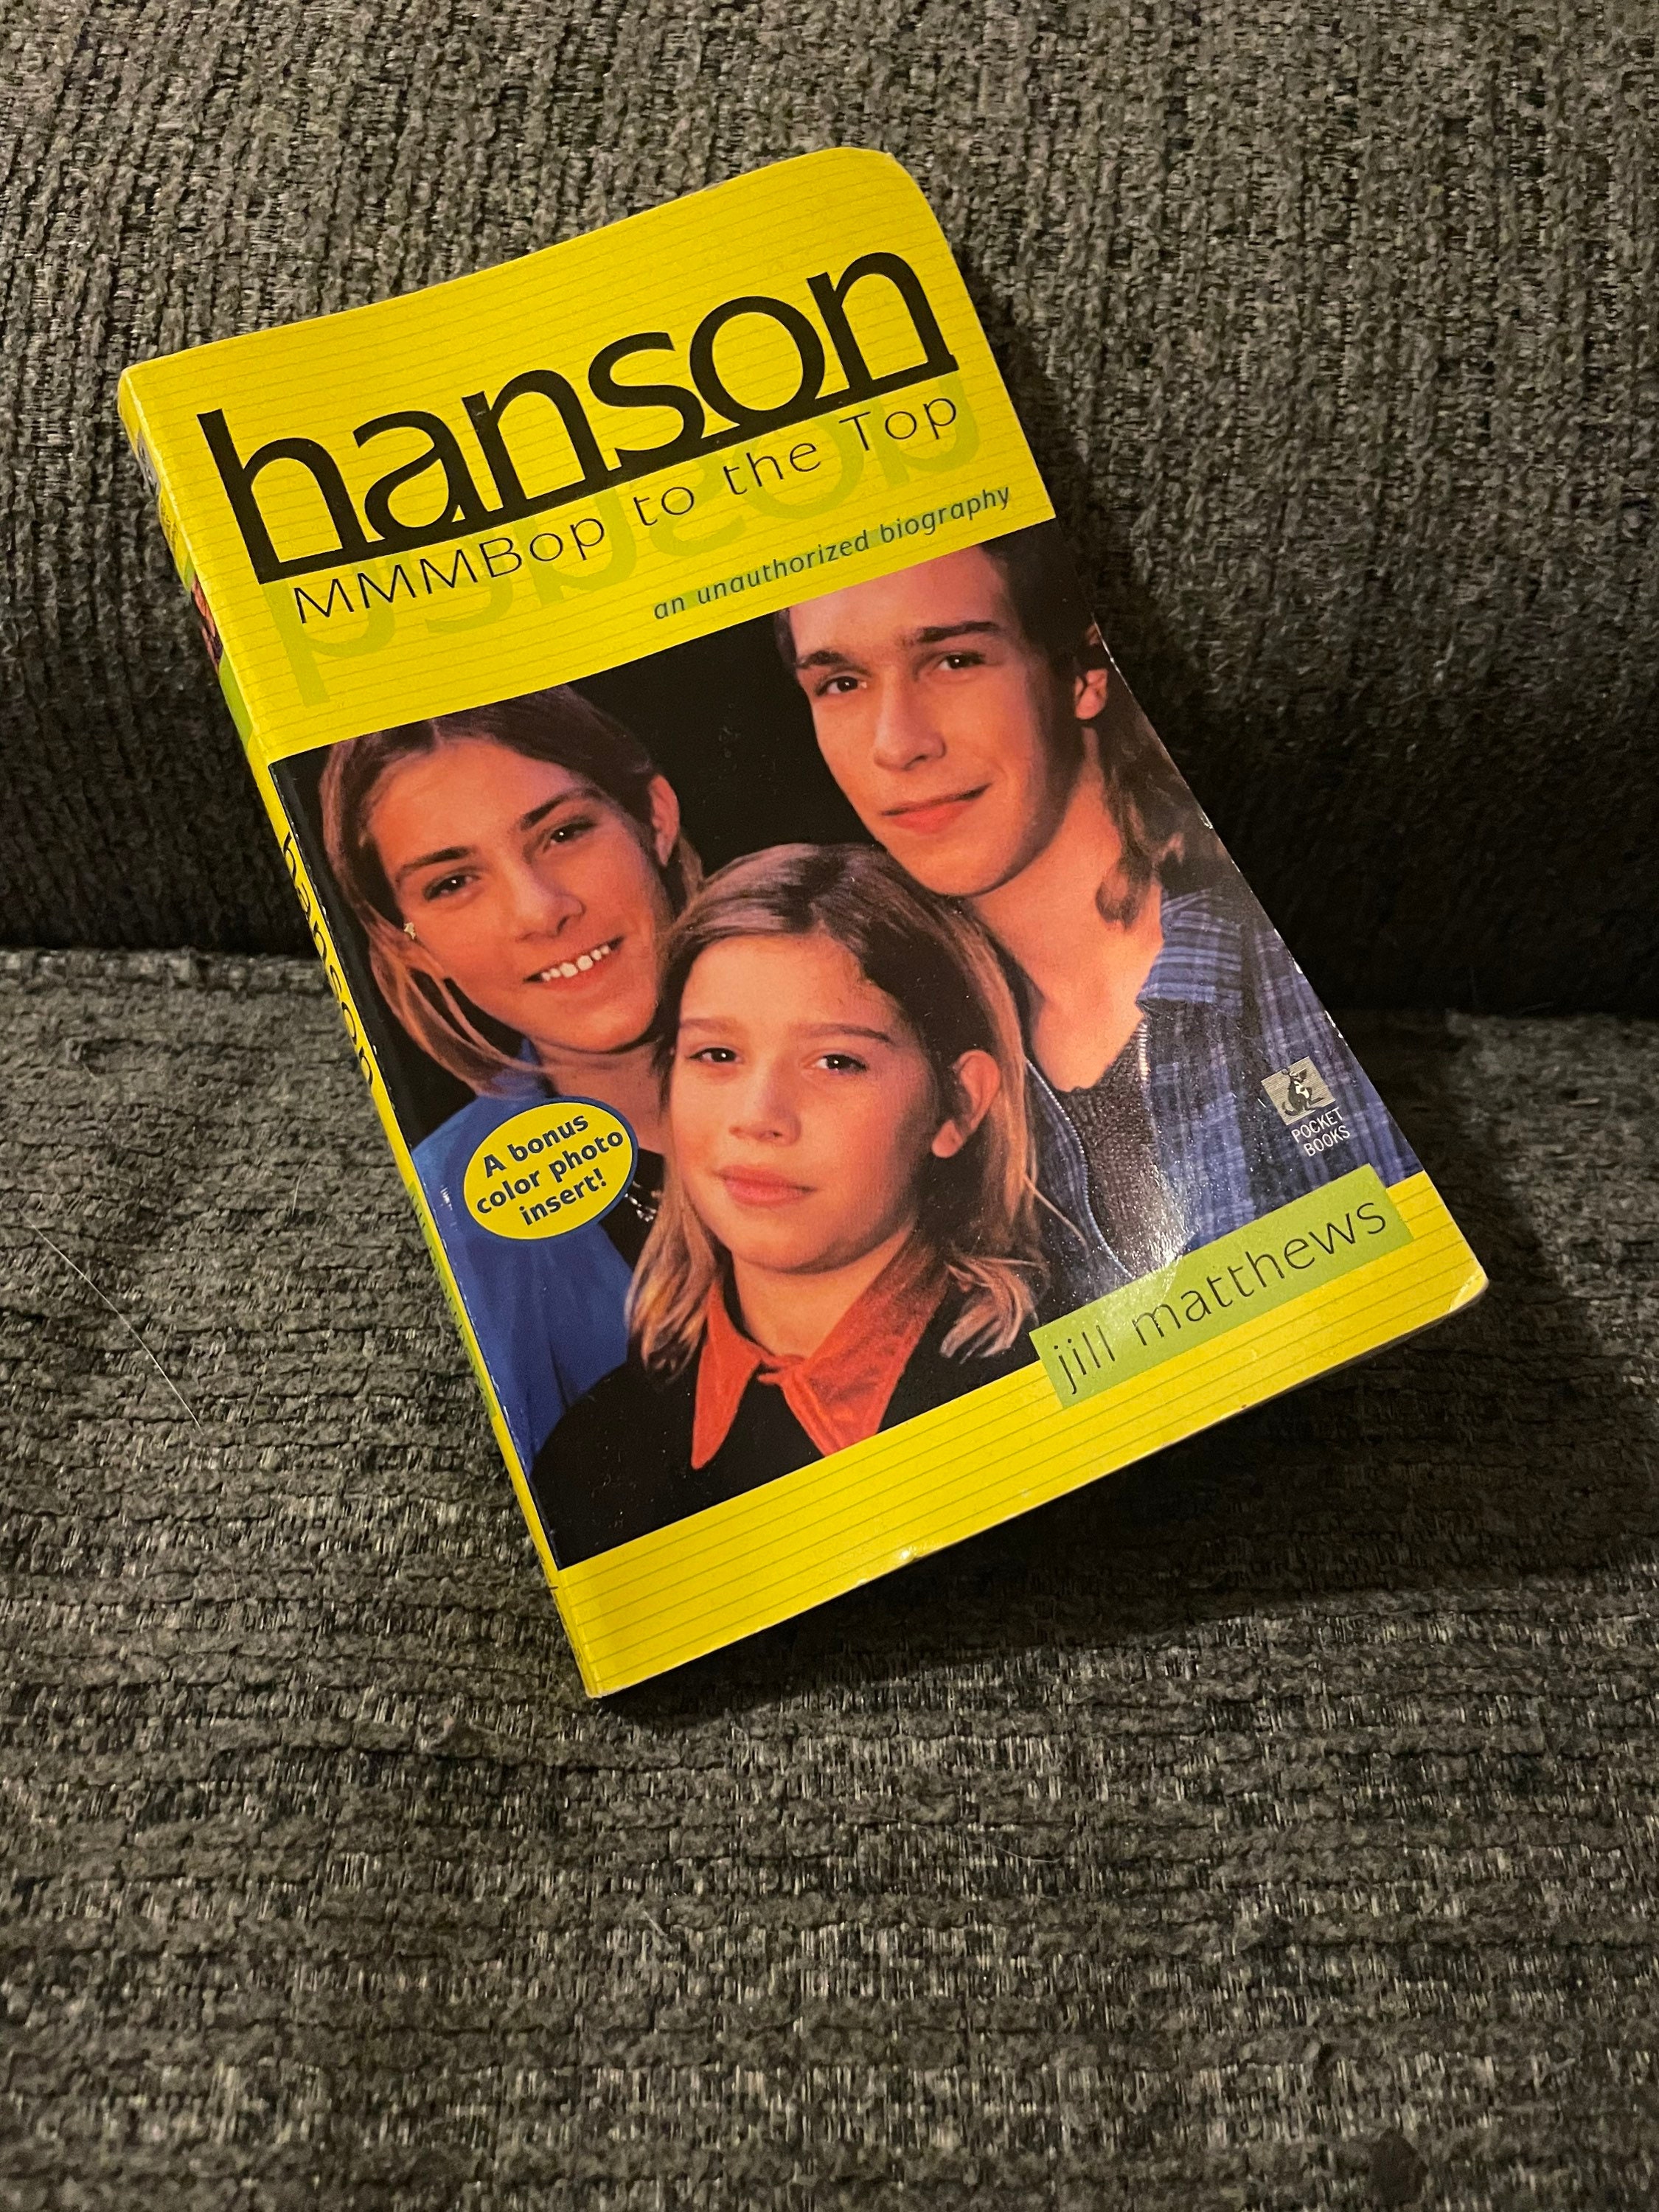 Hanson on the 20th Birthday of 'MMMBop